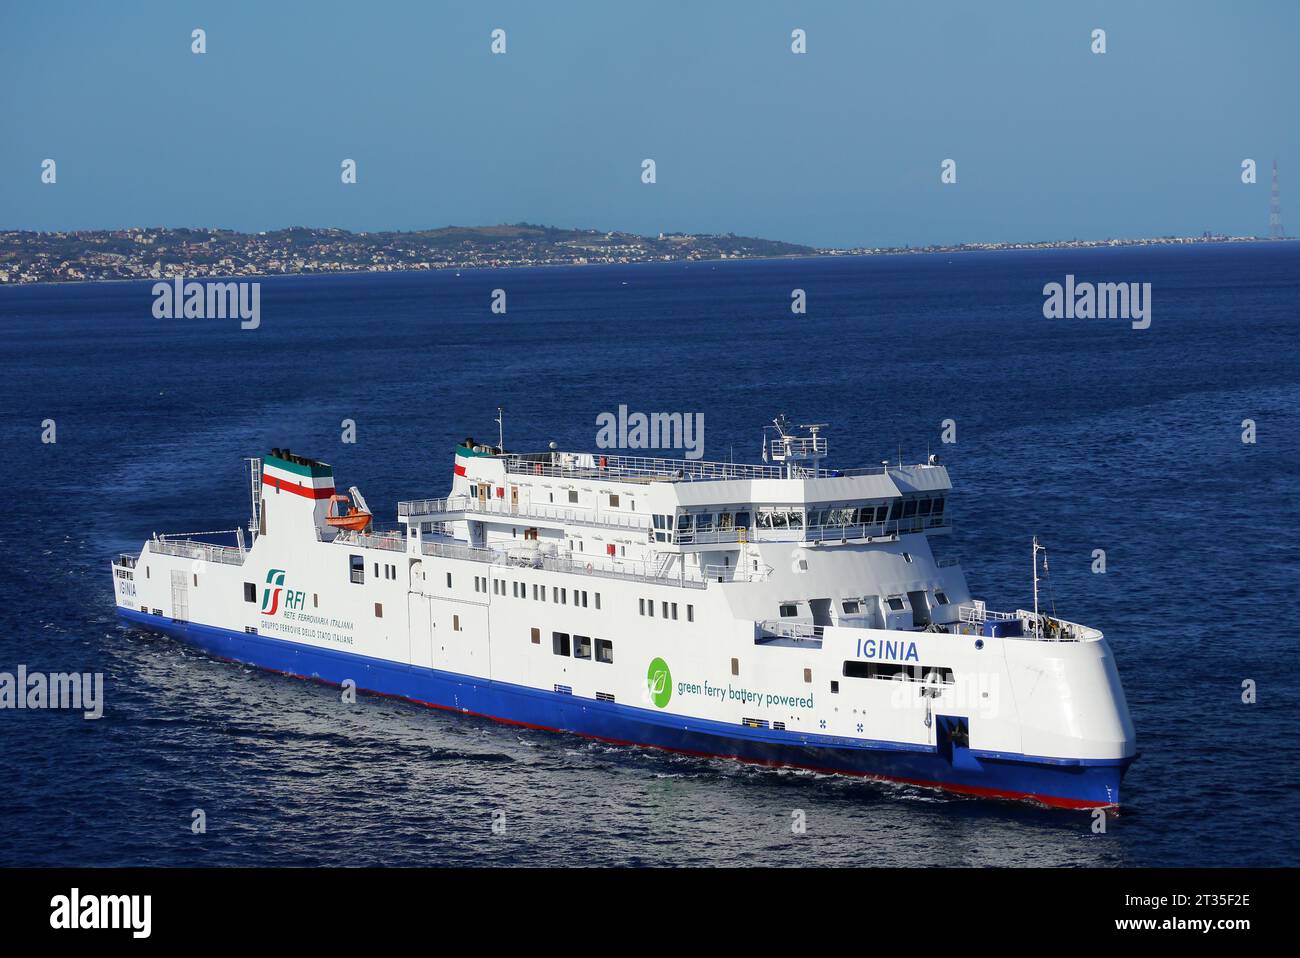 The Green Hybrid Battery Powered Ferry IGINIA of 'RFI' Rete Ferroviaria Italiana (Gruppo FS Italiane) Entering the Port of Messina, Sicily, Italy, EU. Stock Photo